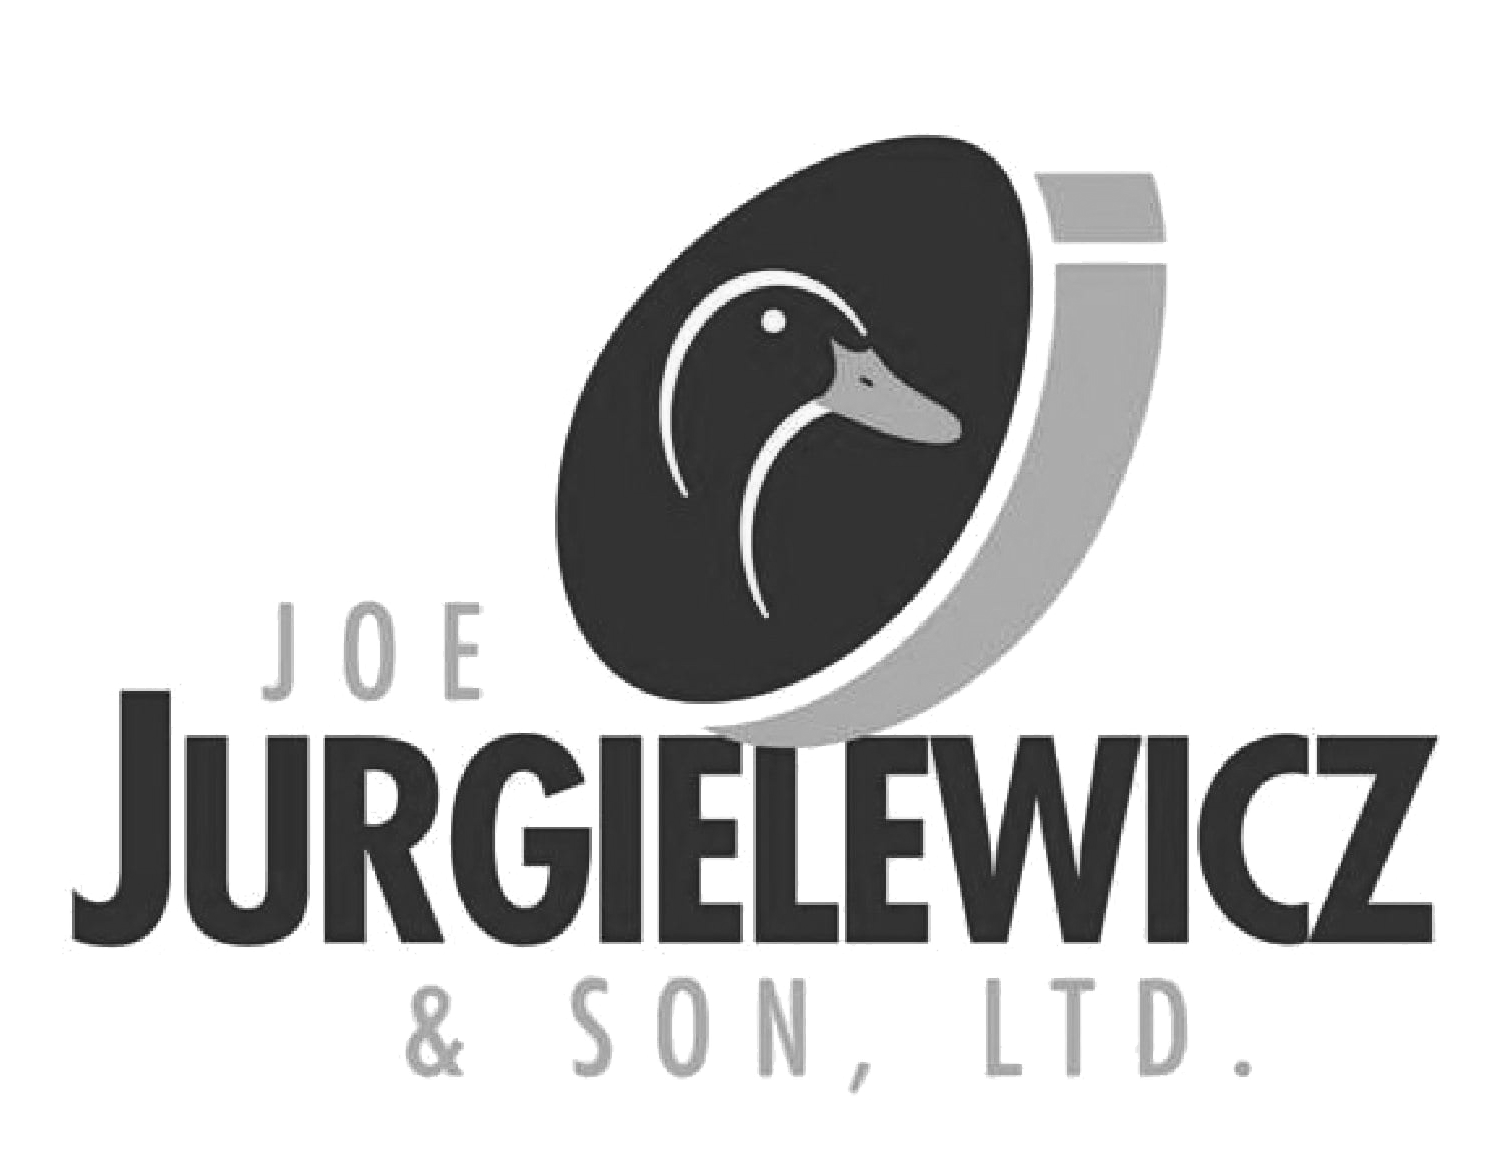 Joe Jurgielewicz & Son, LTD logo.